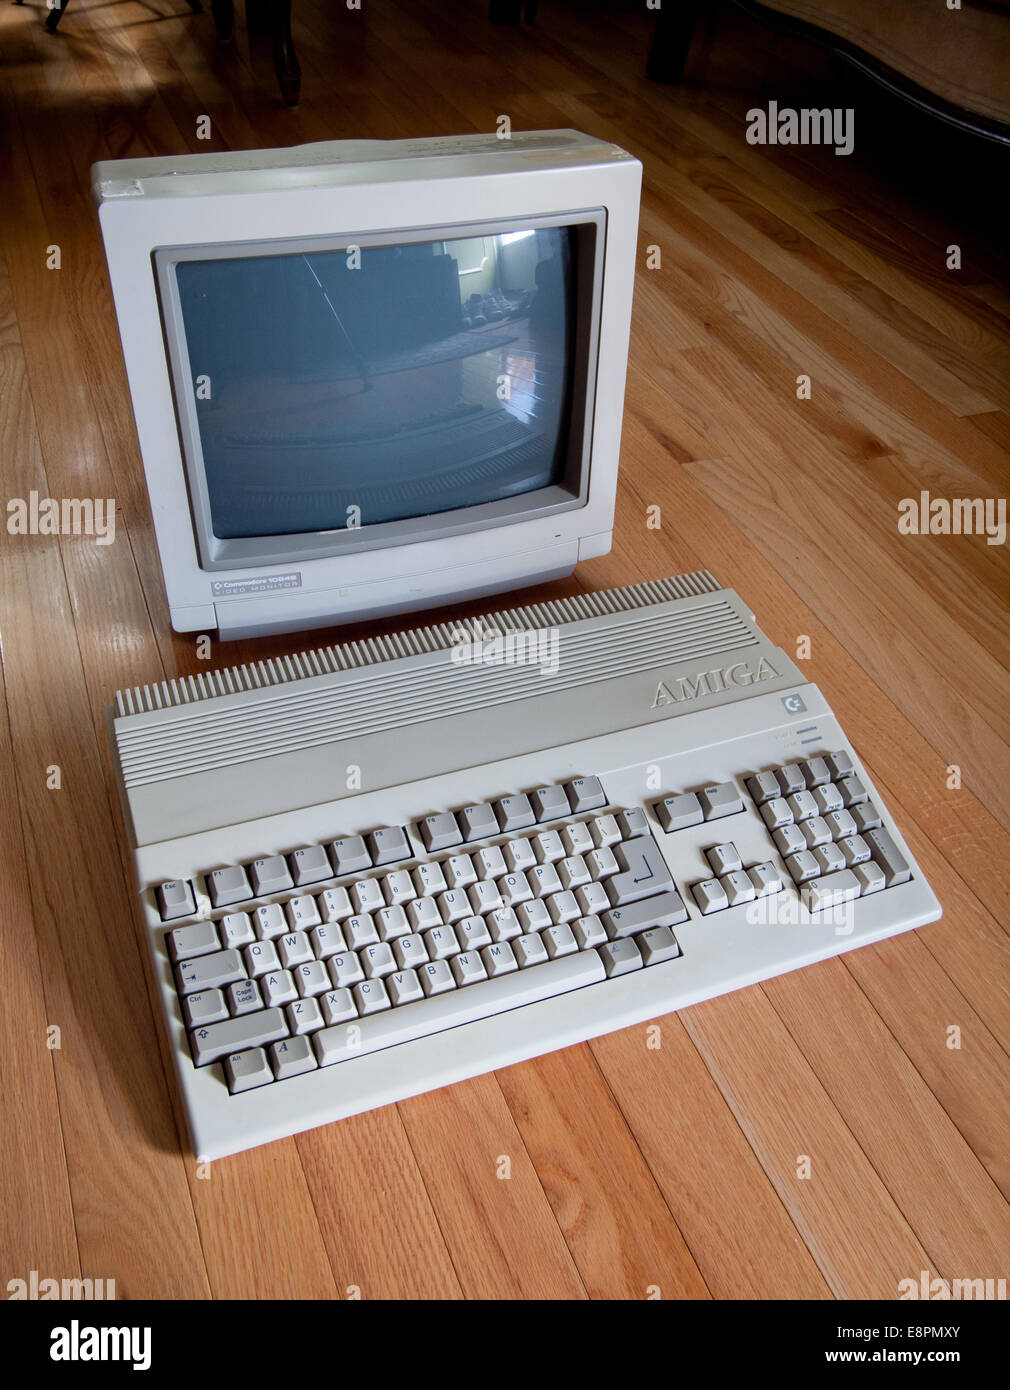 A view of a Commodore Amiga 500 computer and a Commodore 1084S computer monitor. Stock Photo